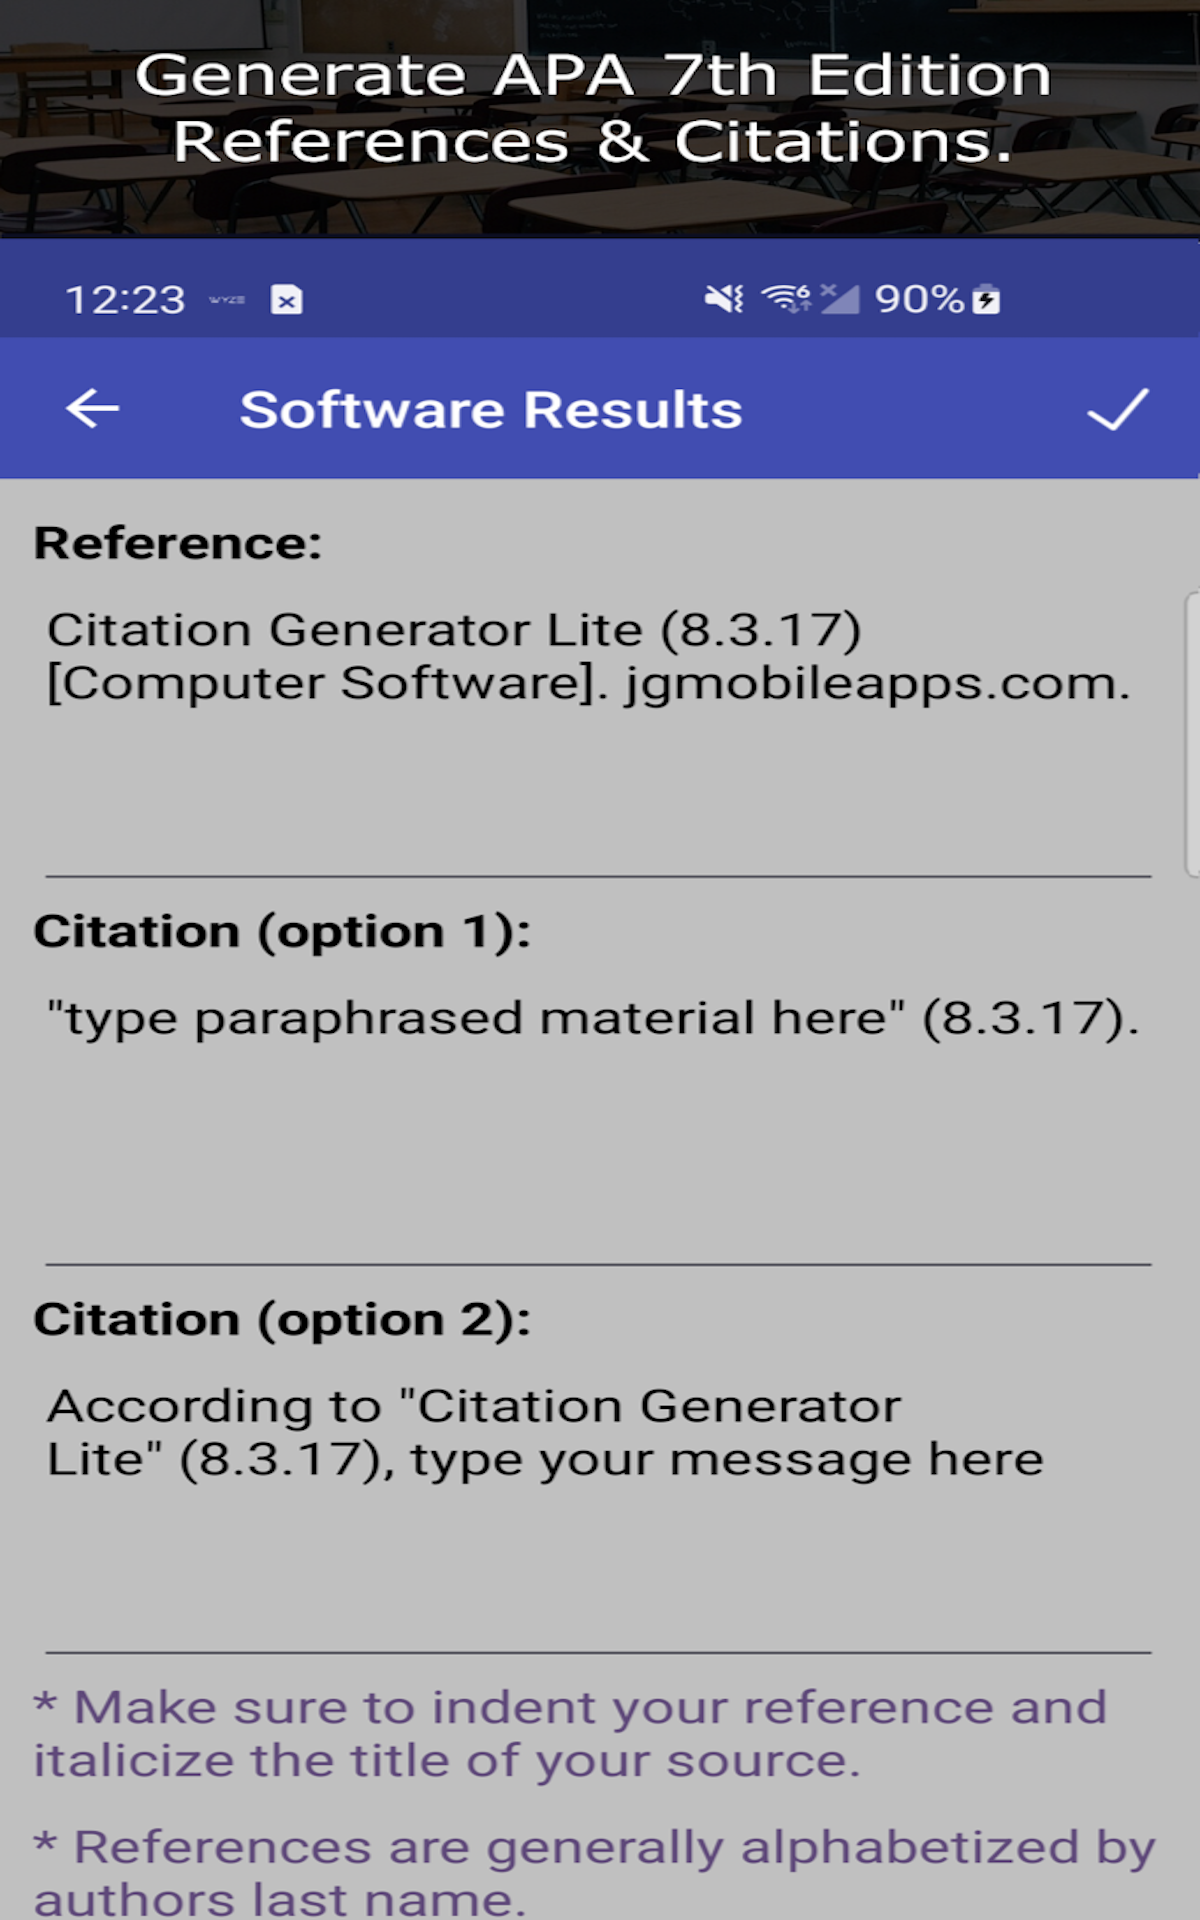 Citation Generator Lite